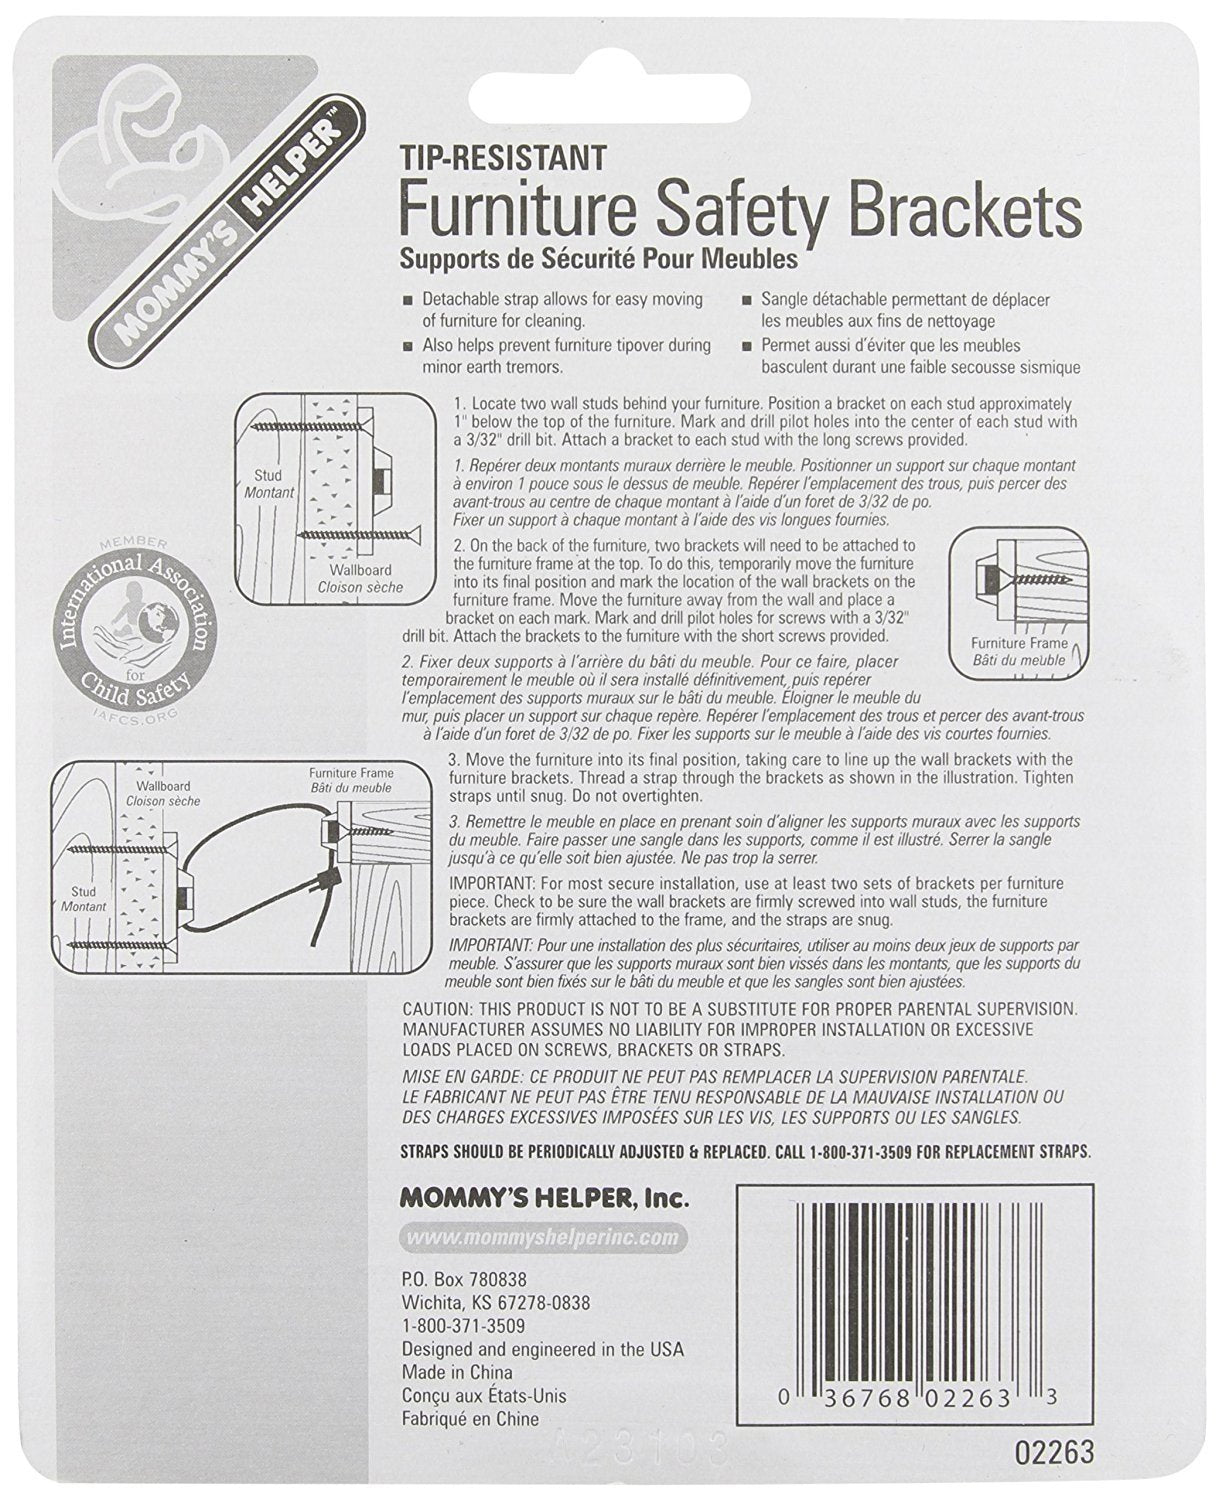 Mommy's Helper - Tip Resistant Furniture Safety Brackets, 3 Pack